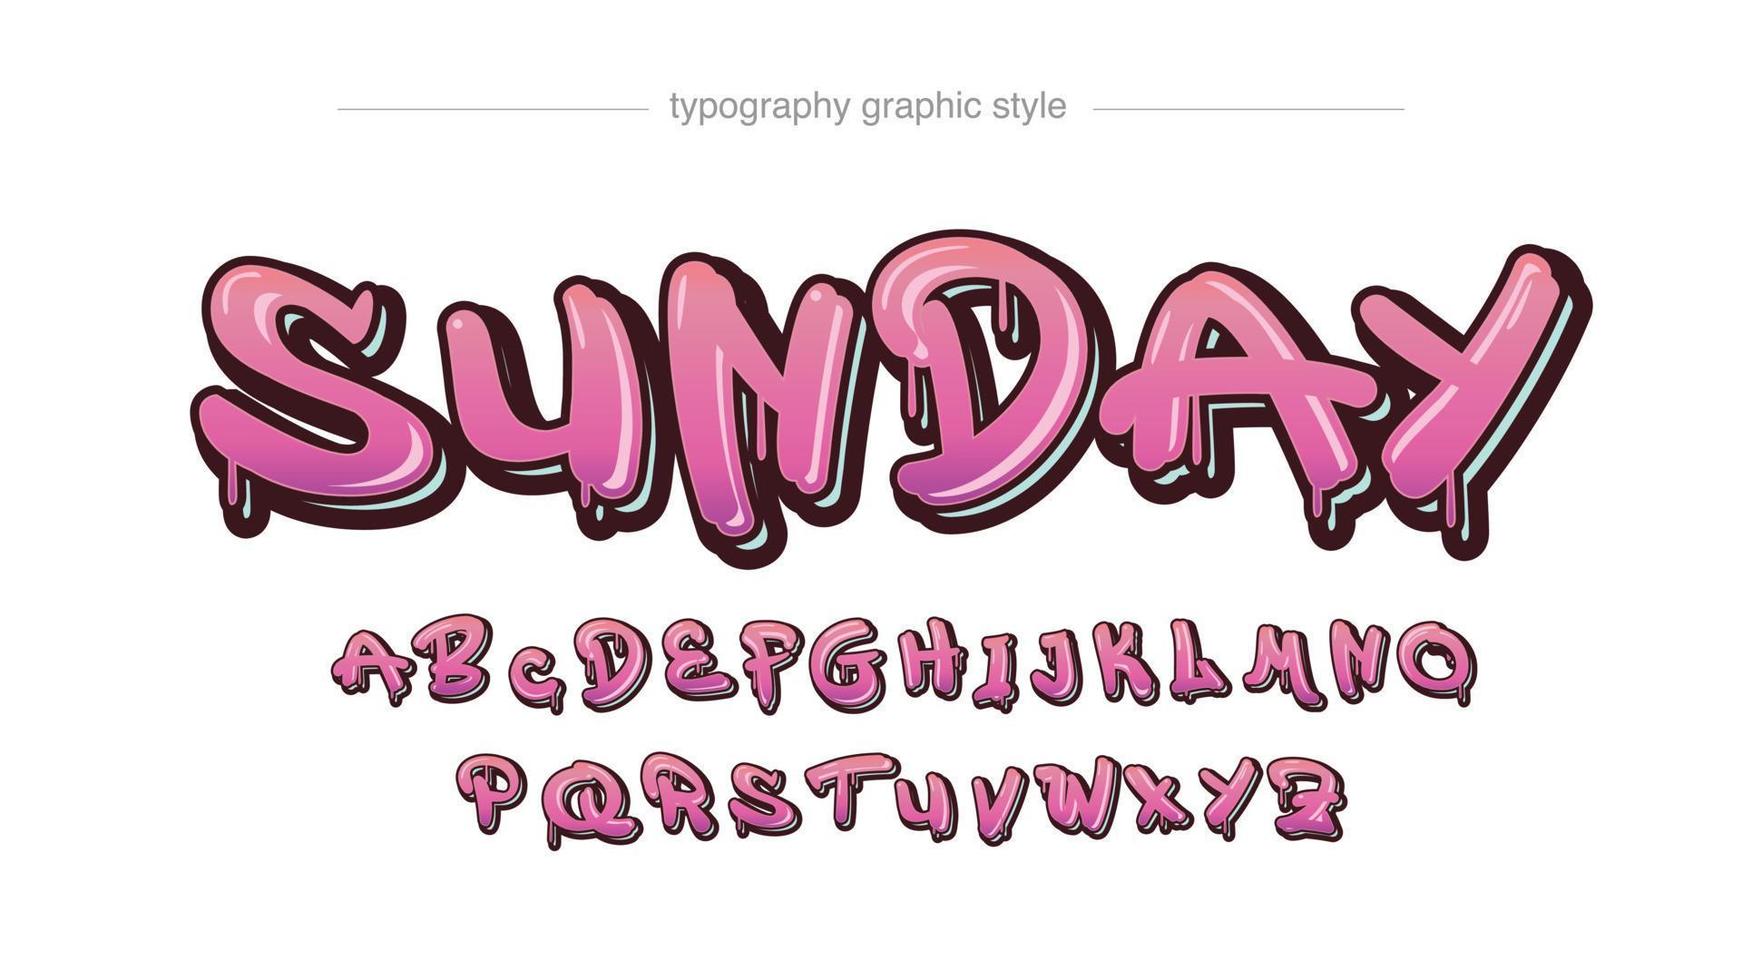 roze druipende graffiti typografie vector